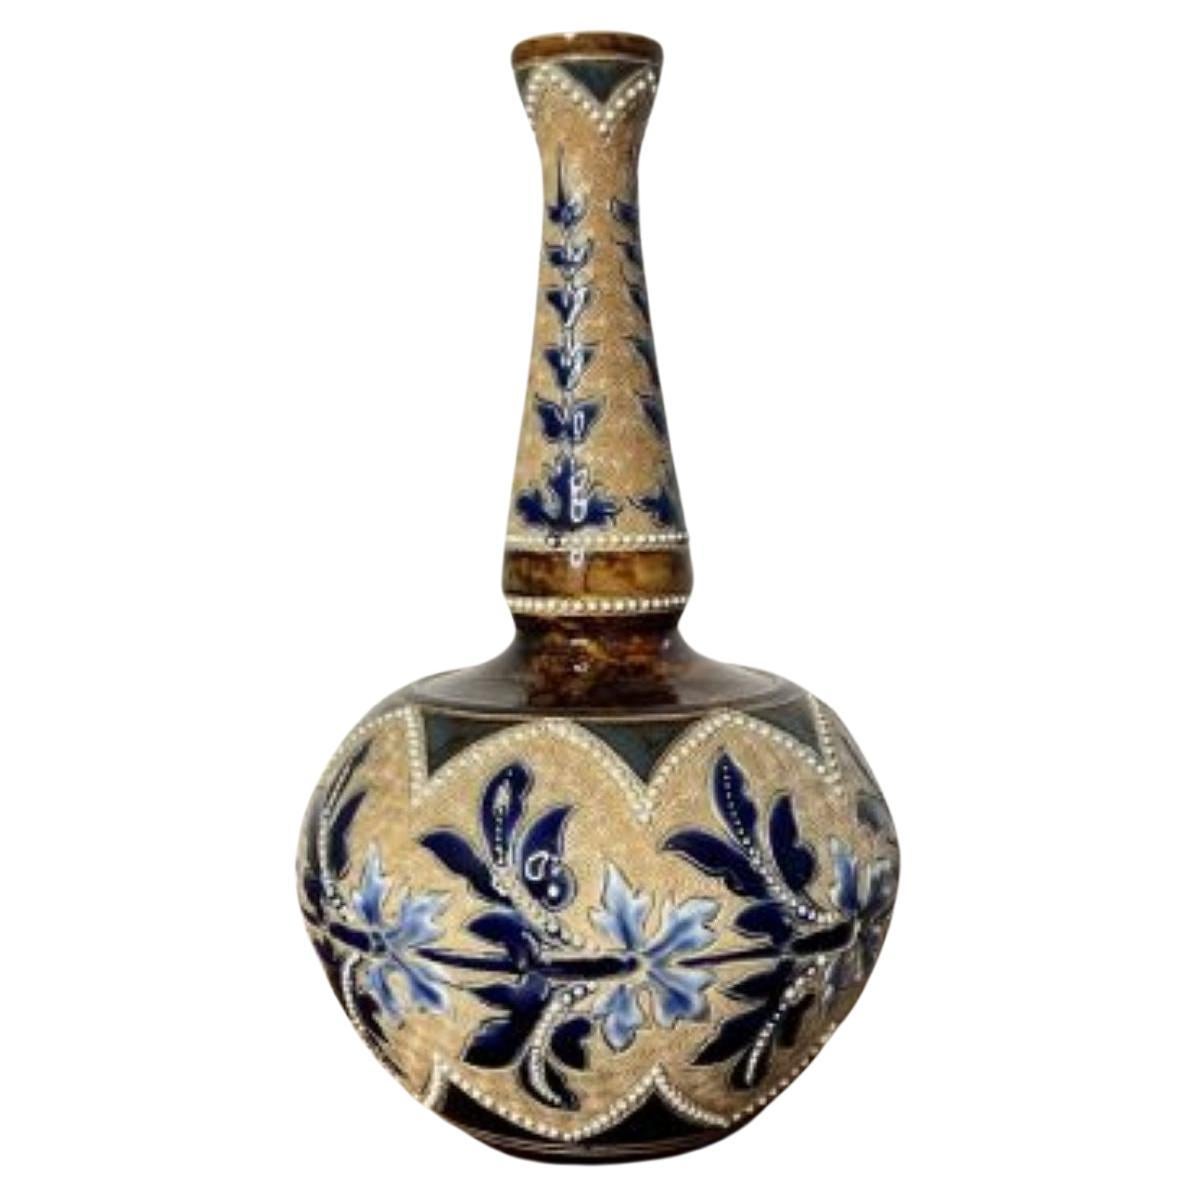 Fantastic quality antique Doulton Lambeth vase by Emily Stormer 